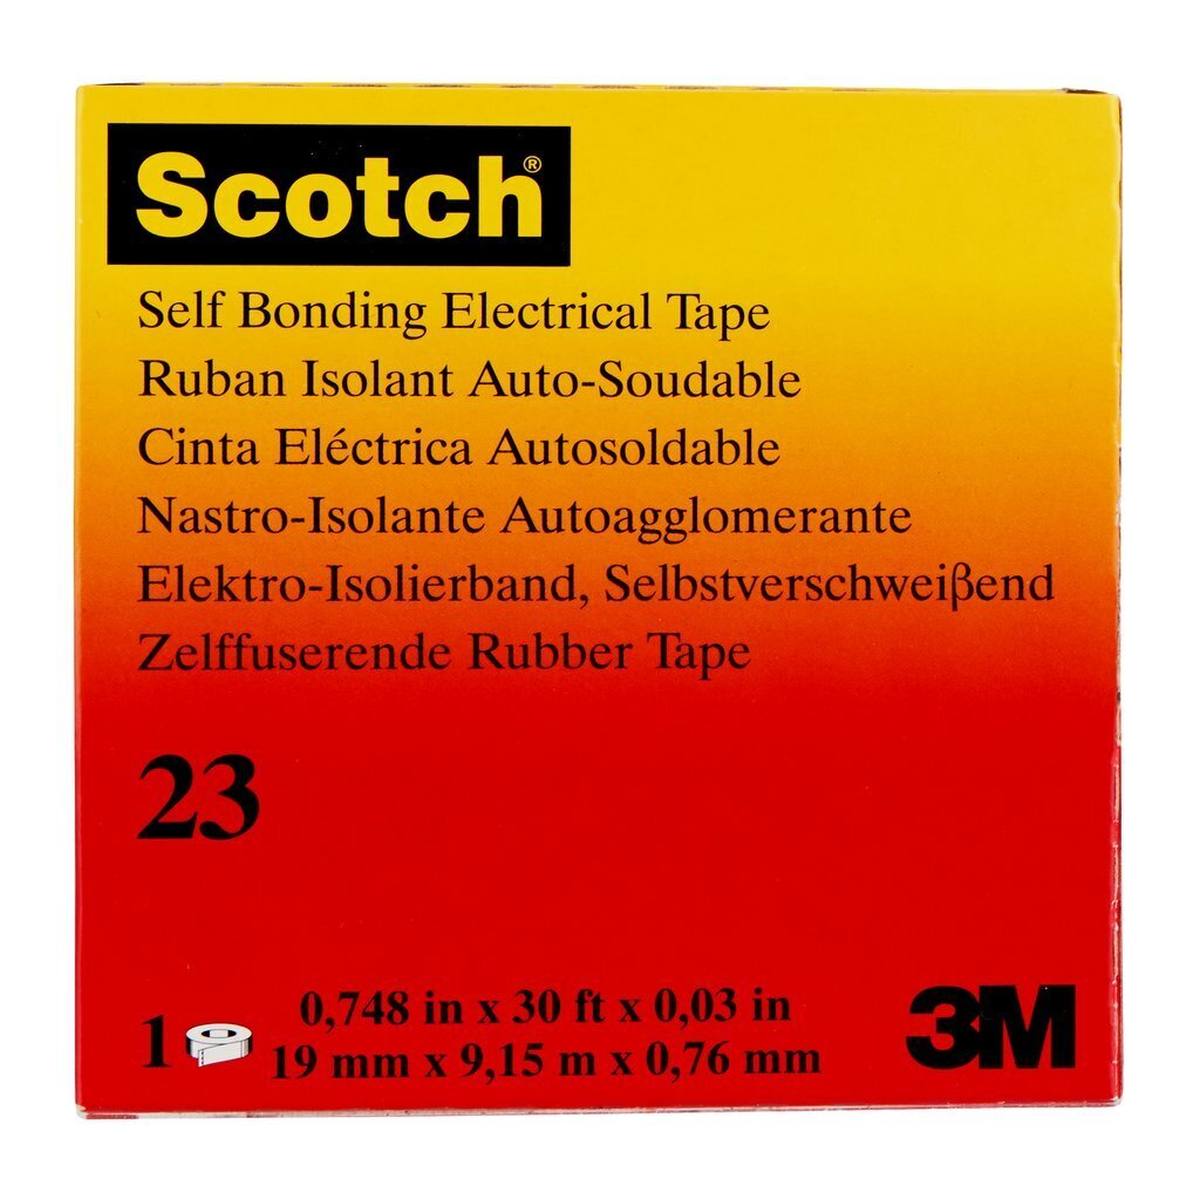 3M Scotch 23 Nastro autosigillante in gomma etilene-propilene, 19 mm x 9,15 m